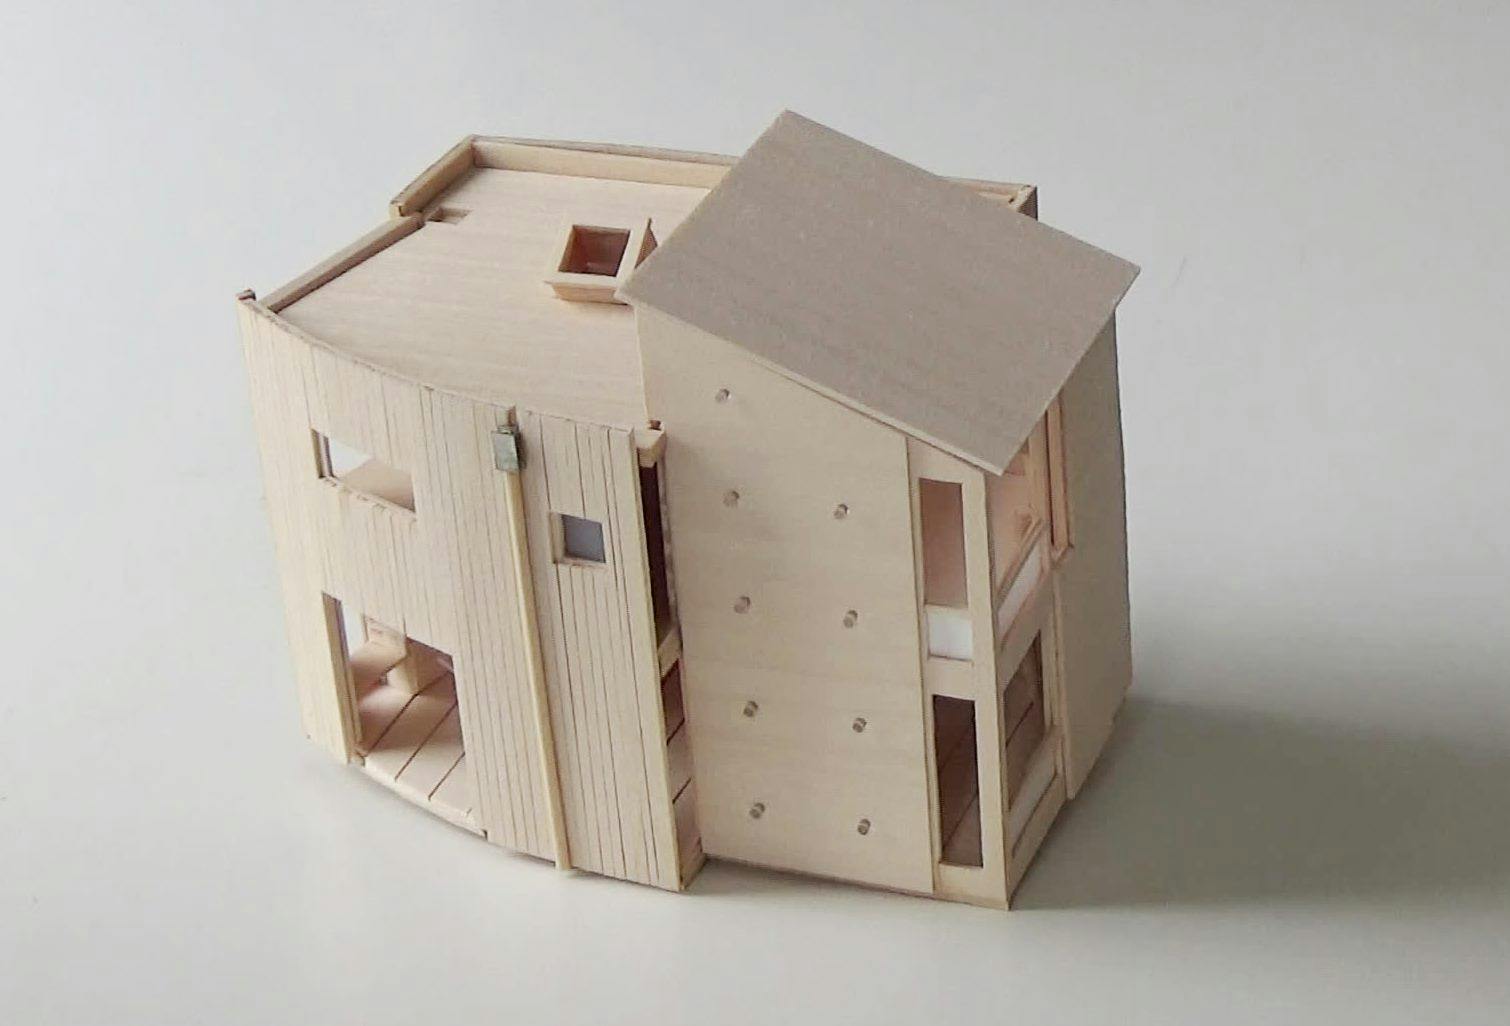 A model of a building